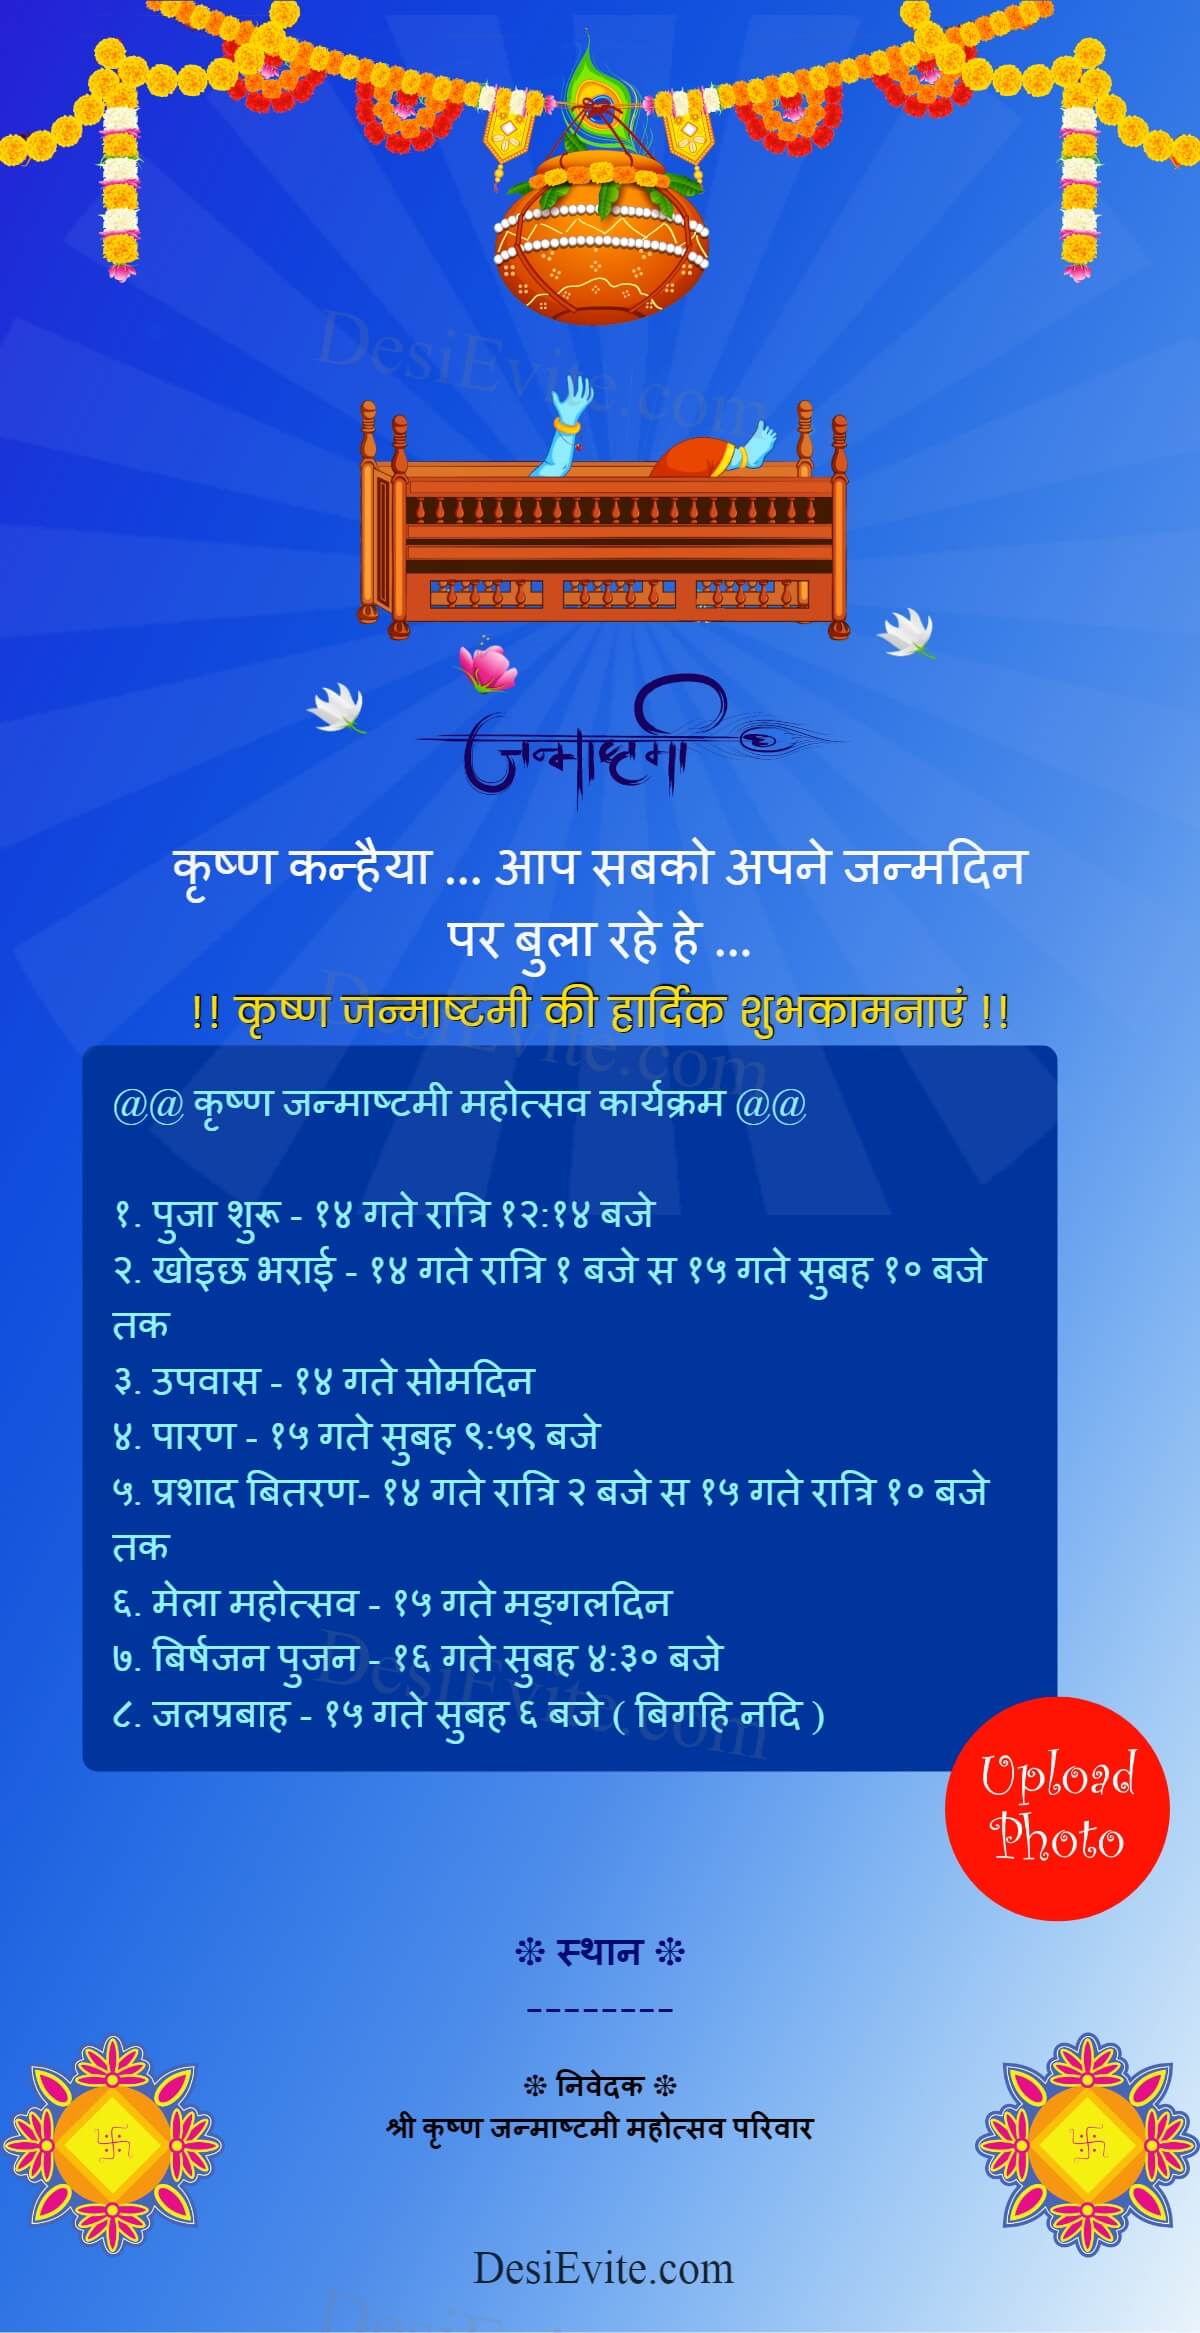 Hindi krishna janmasthami invitation card template 93